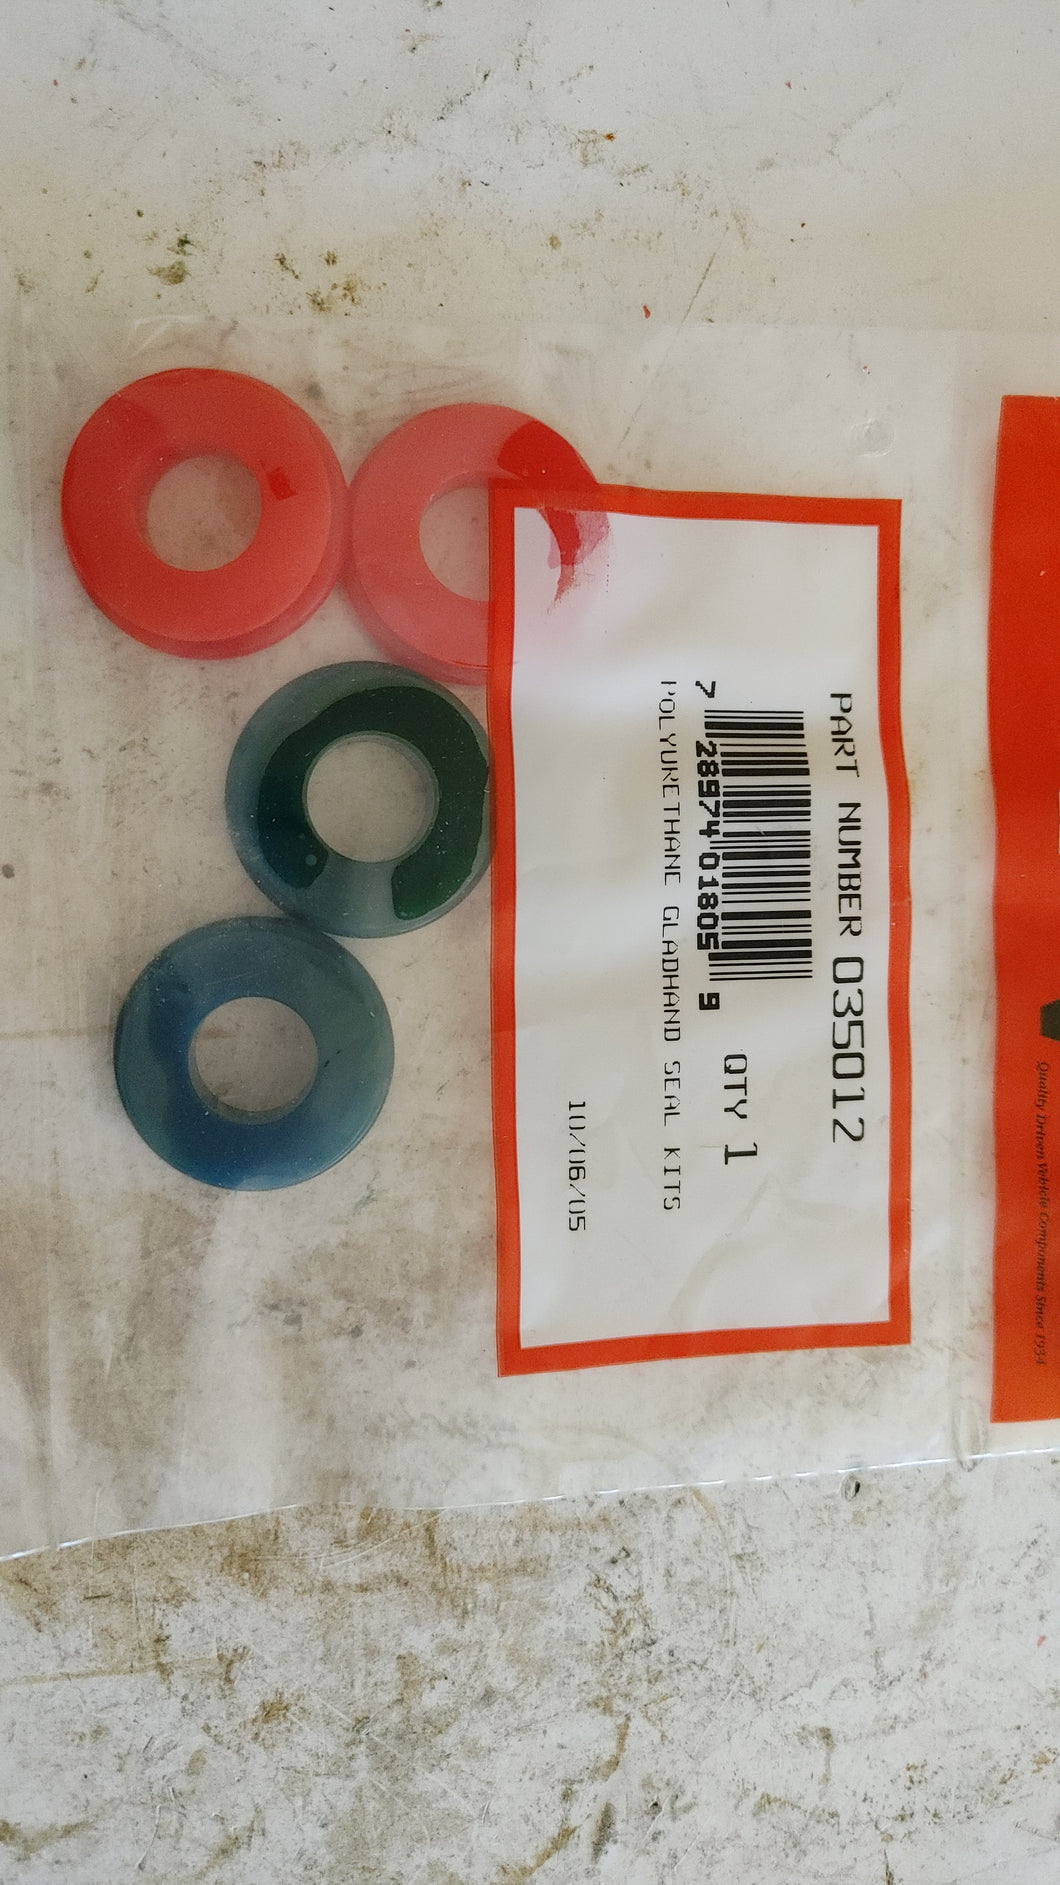 035012 - Velvac - Polyurethane Gladhand Seal Kit, 4 seals per bag, 2 red and 2 blue